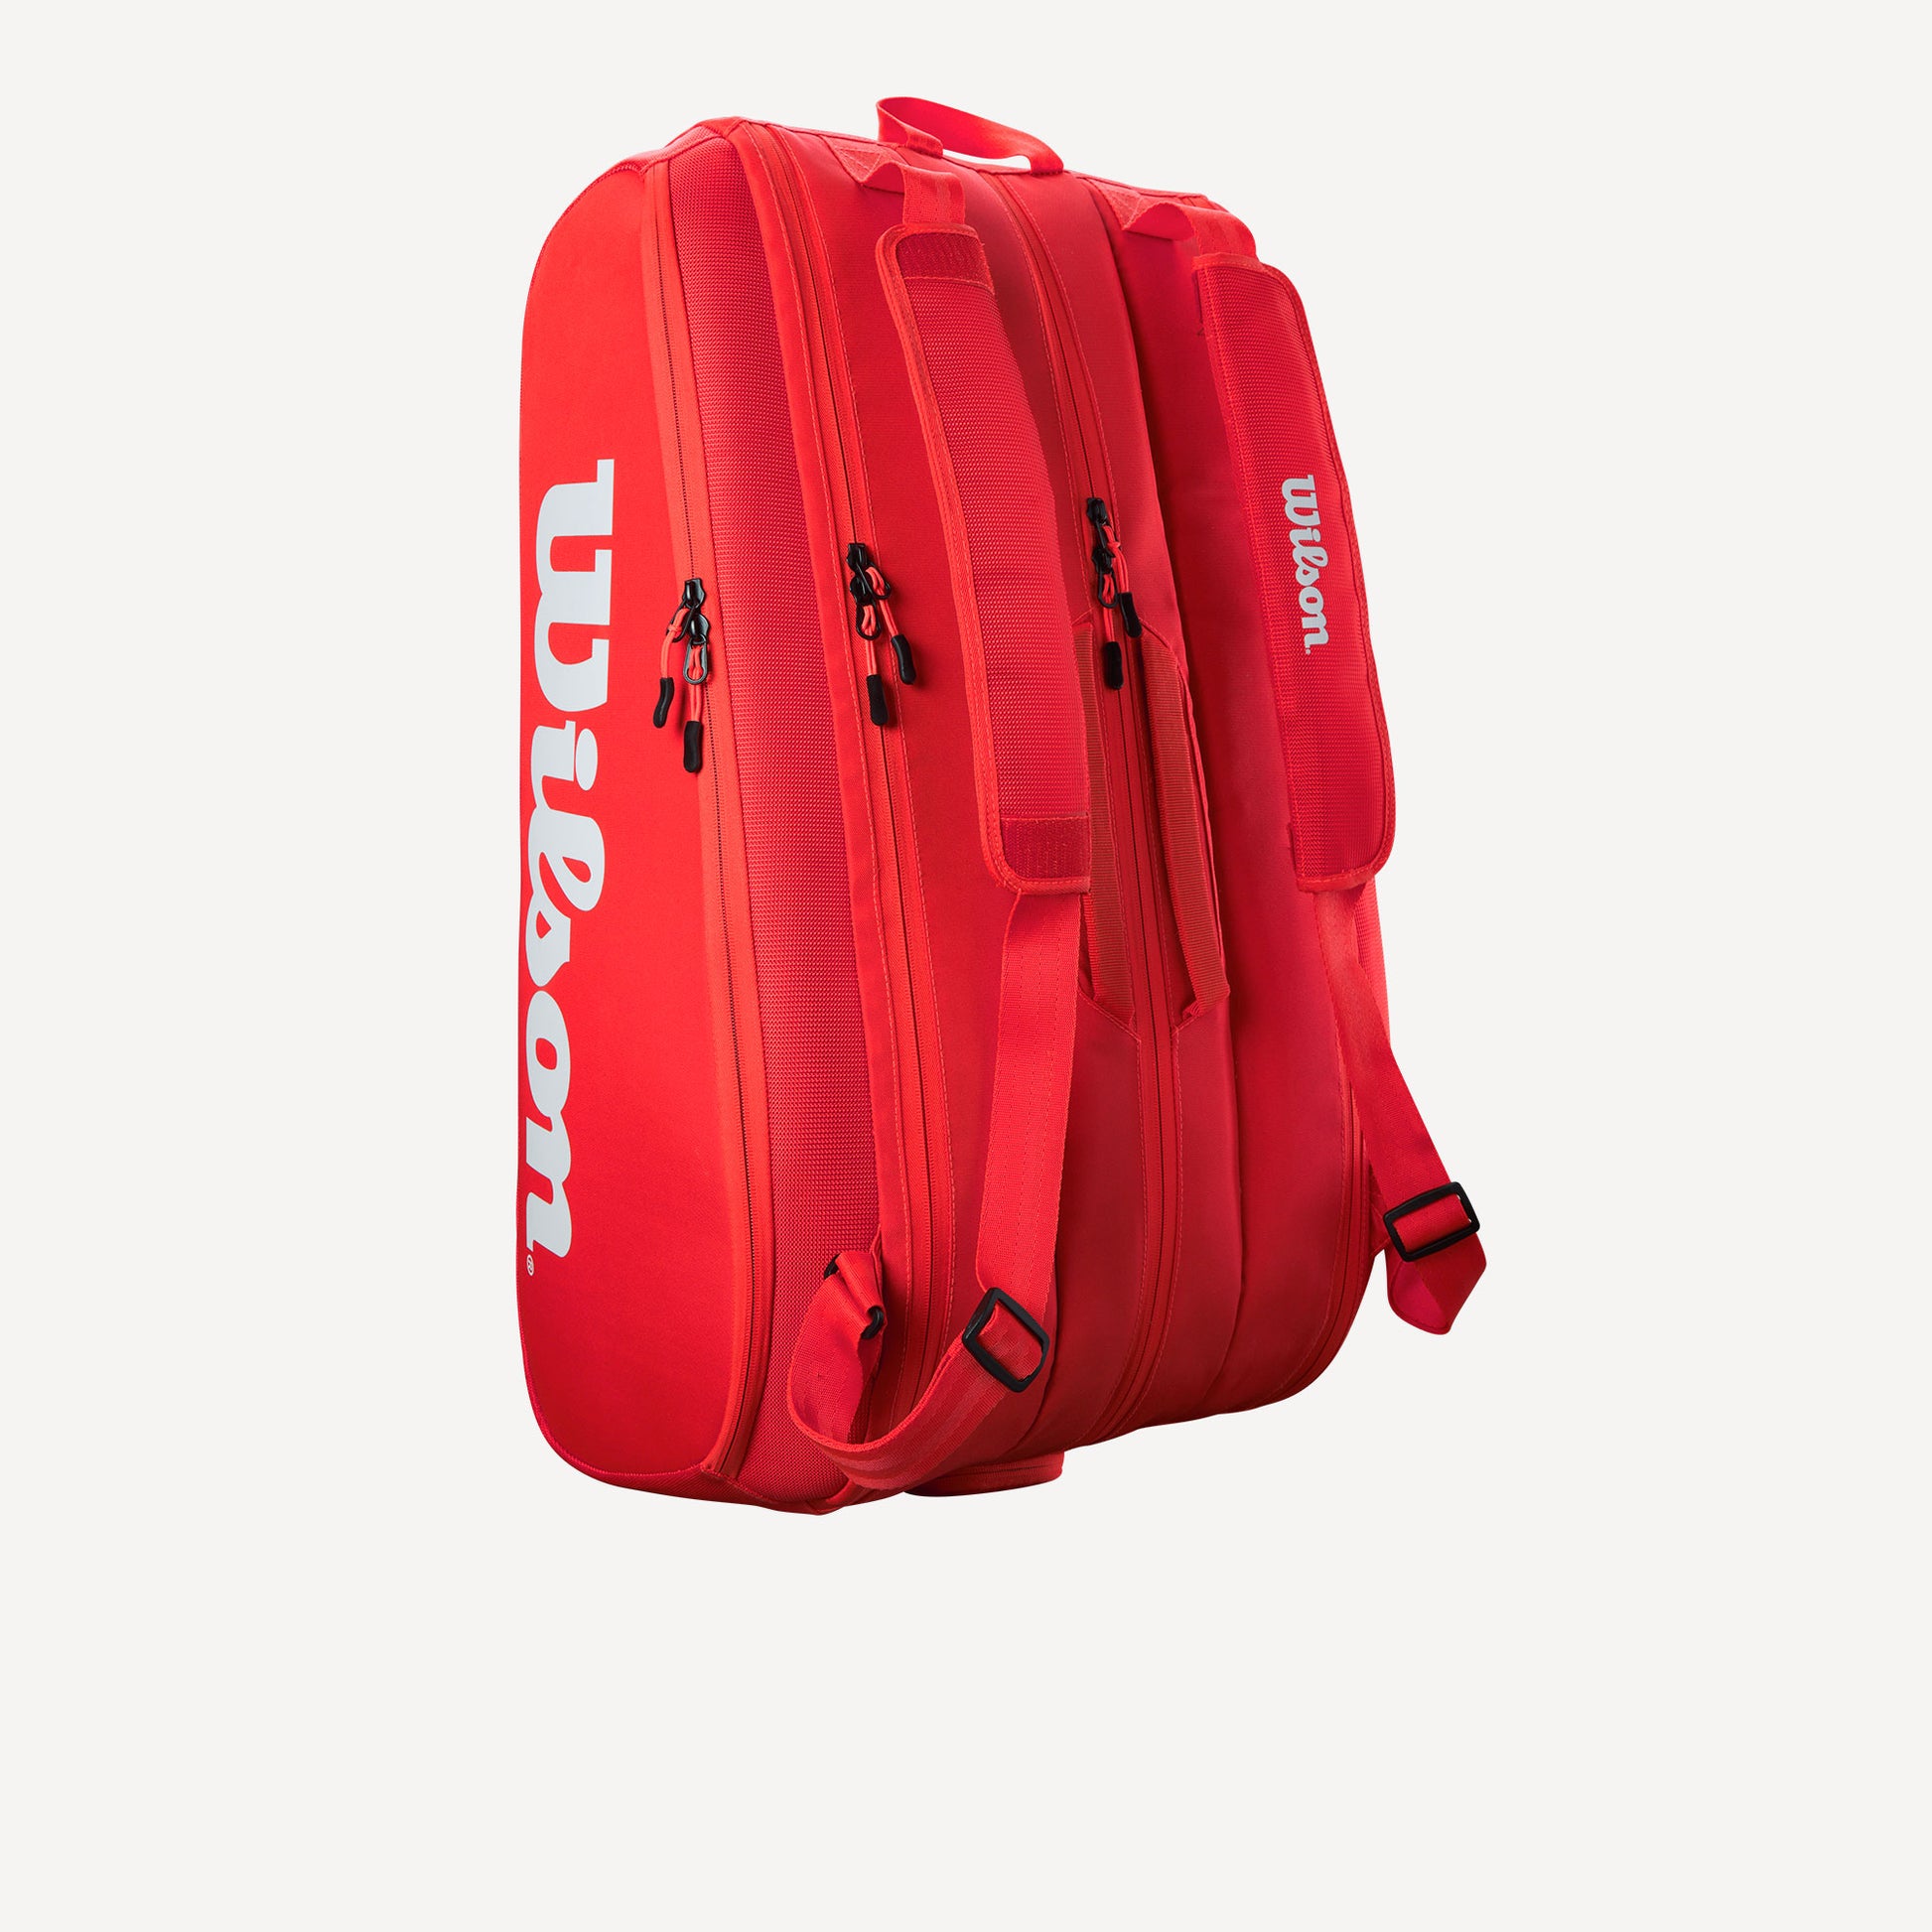 Wilson Super Tour 15 Pack Tennis Bag Red (3)